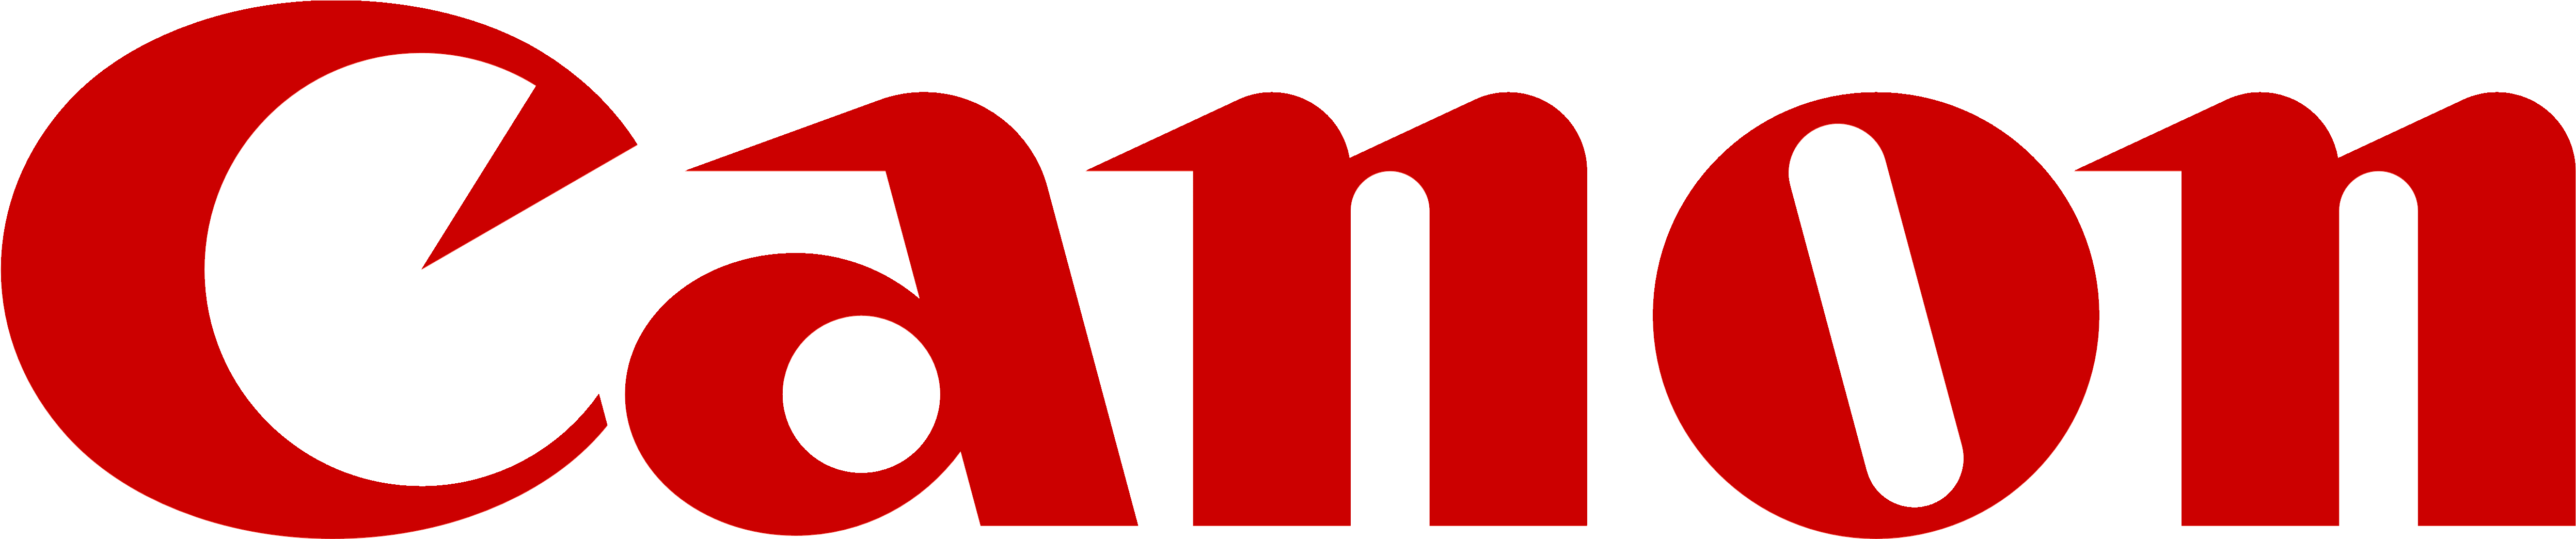 Canon Logo Redon White Background PNG image